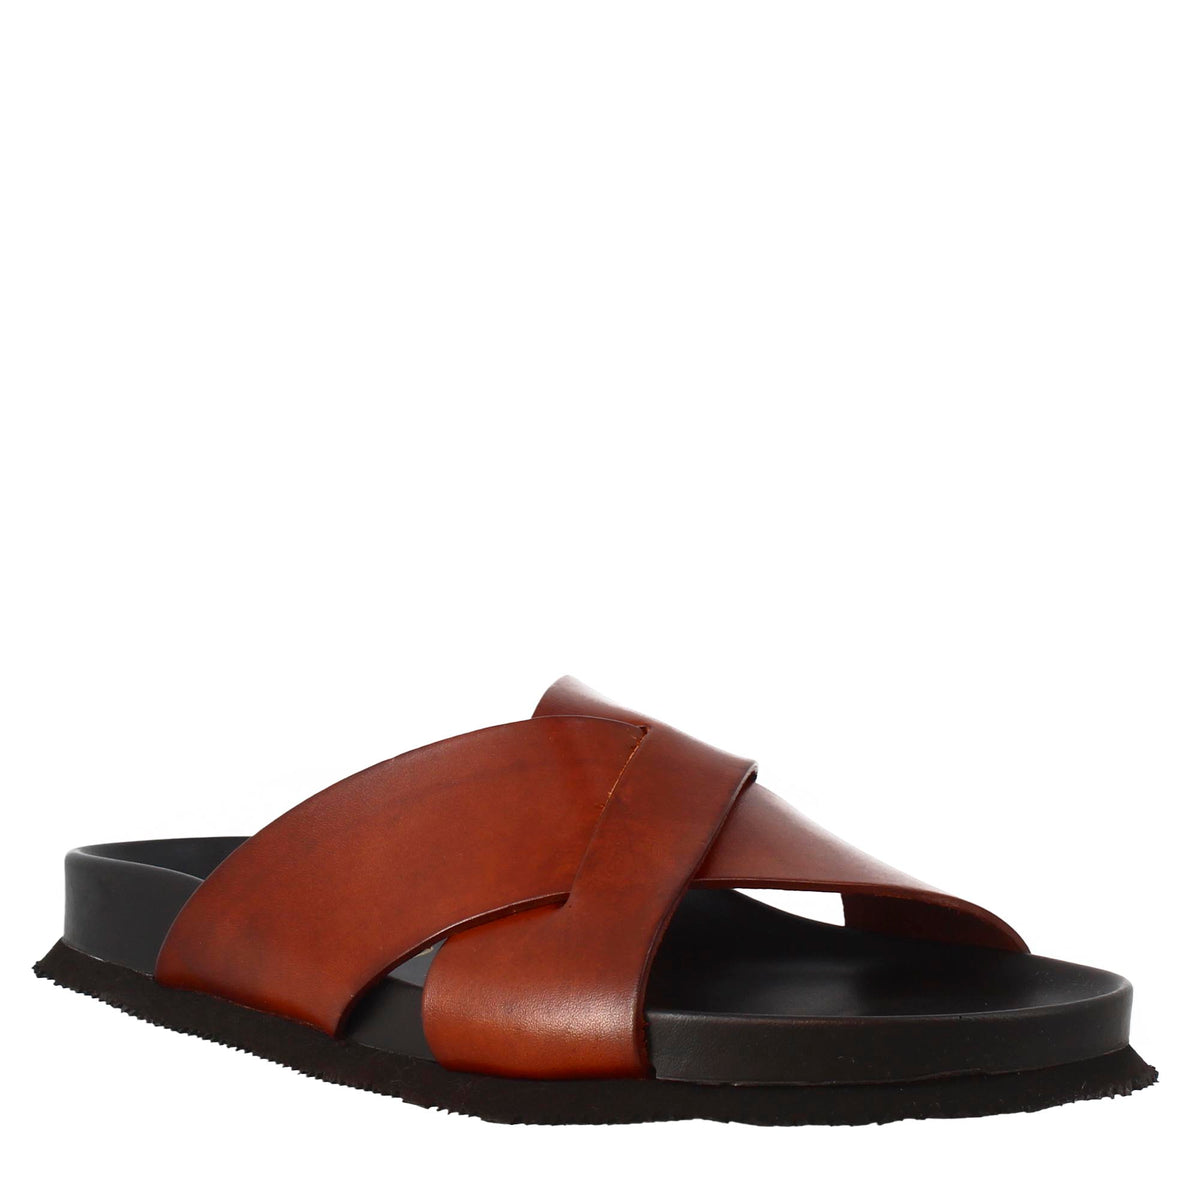 Open back brown leather men's sandals